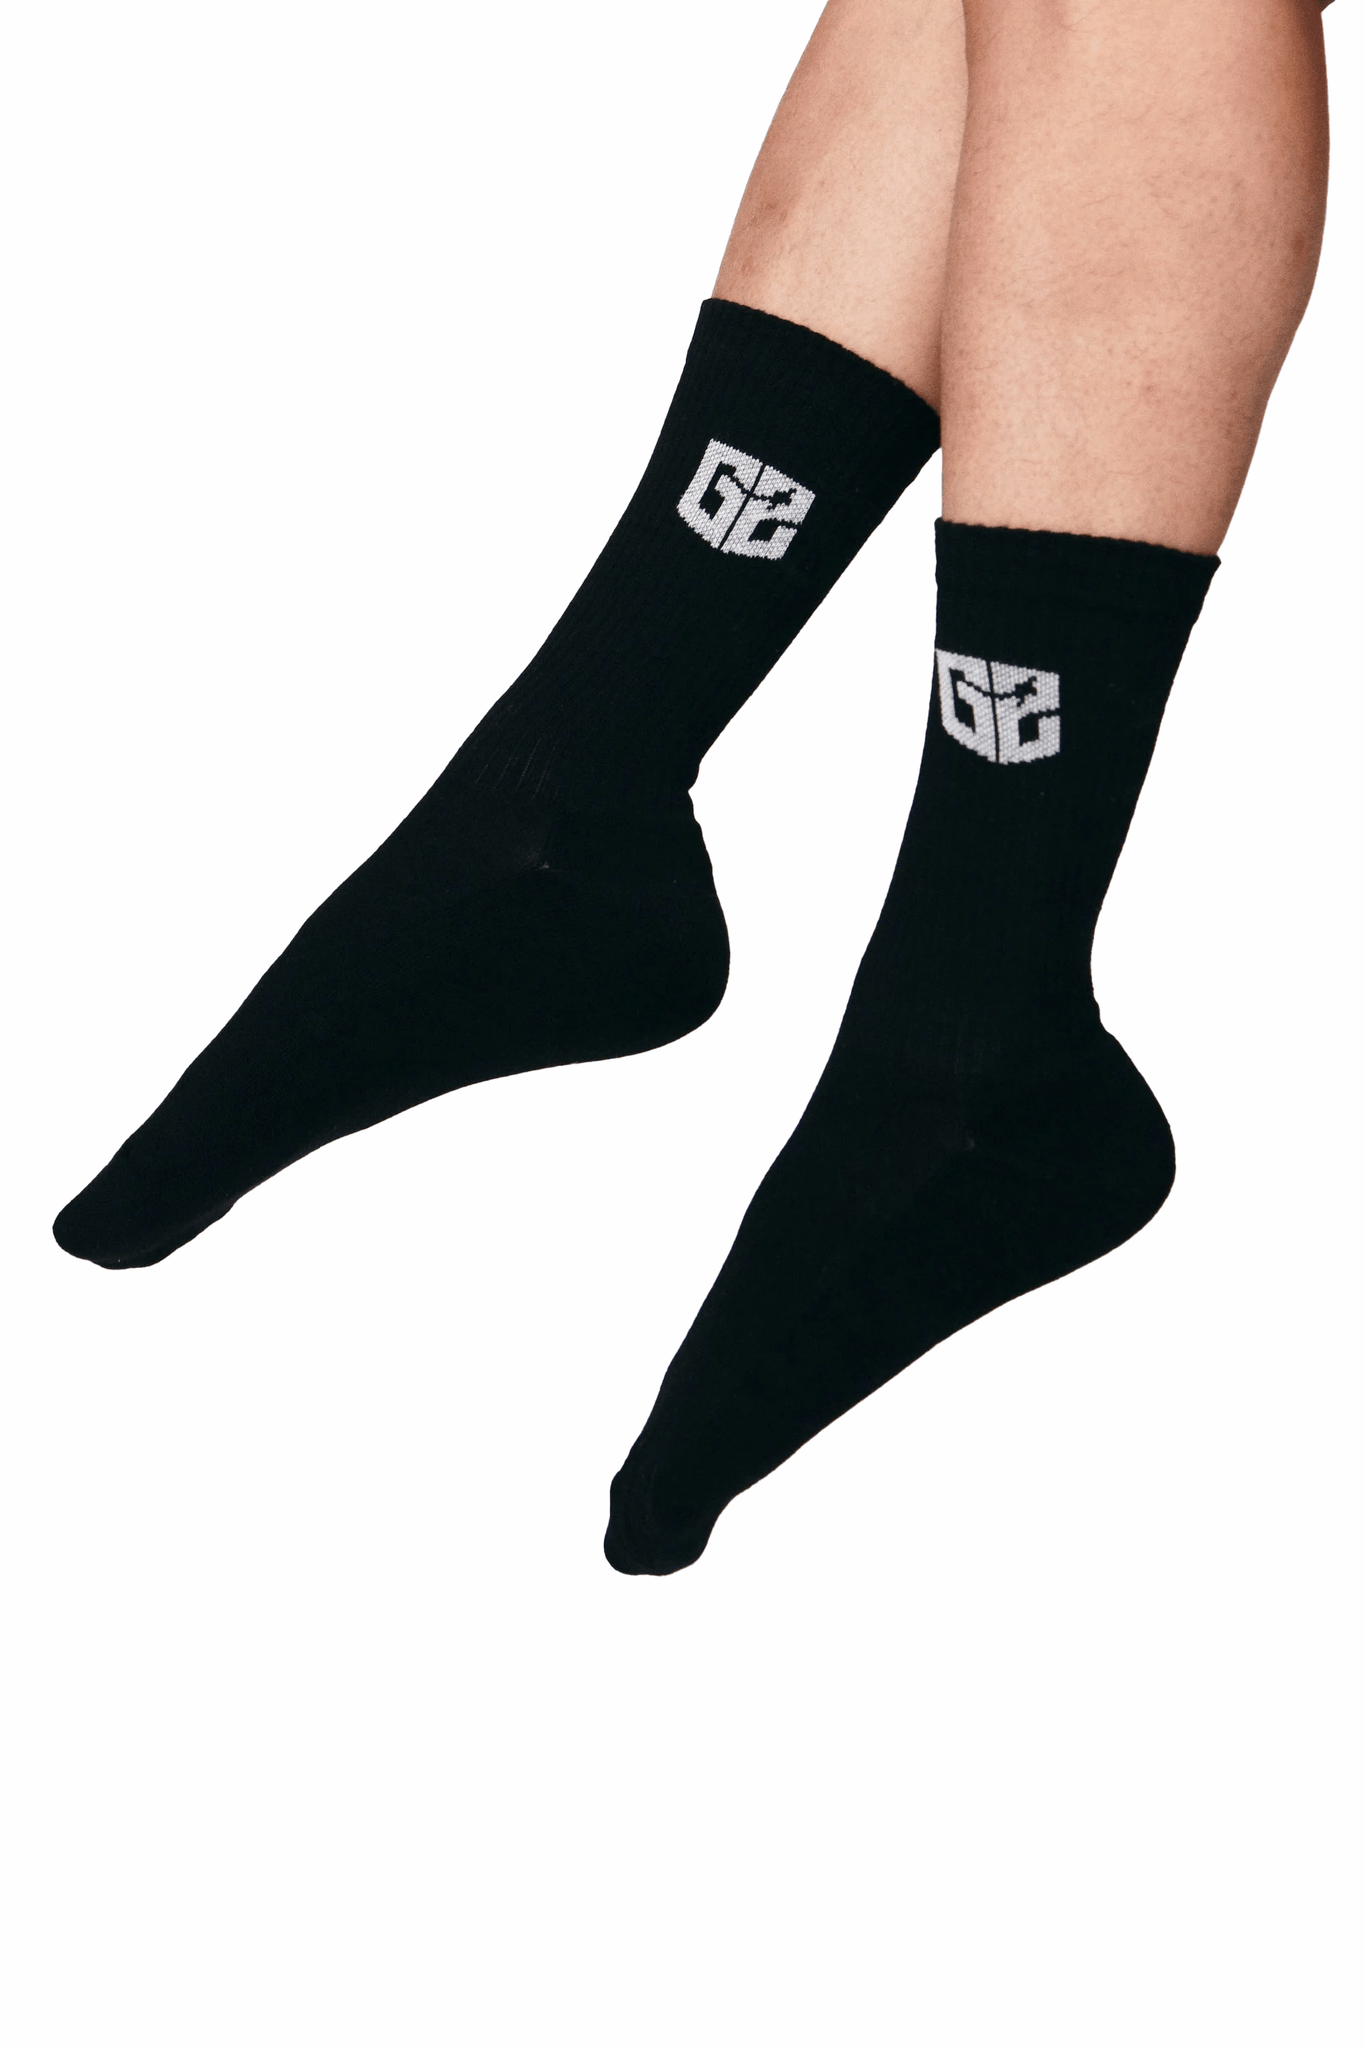 G2 ESSENTIALS - Socks 2 pack - Black / White